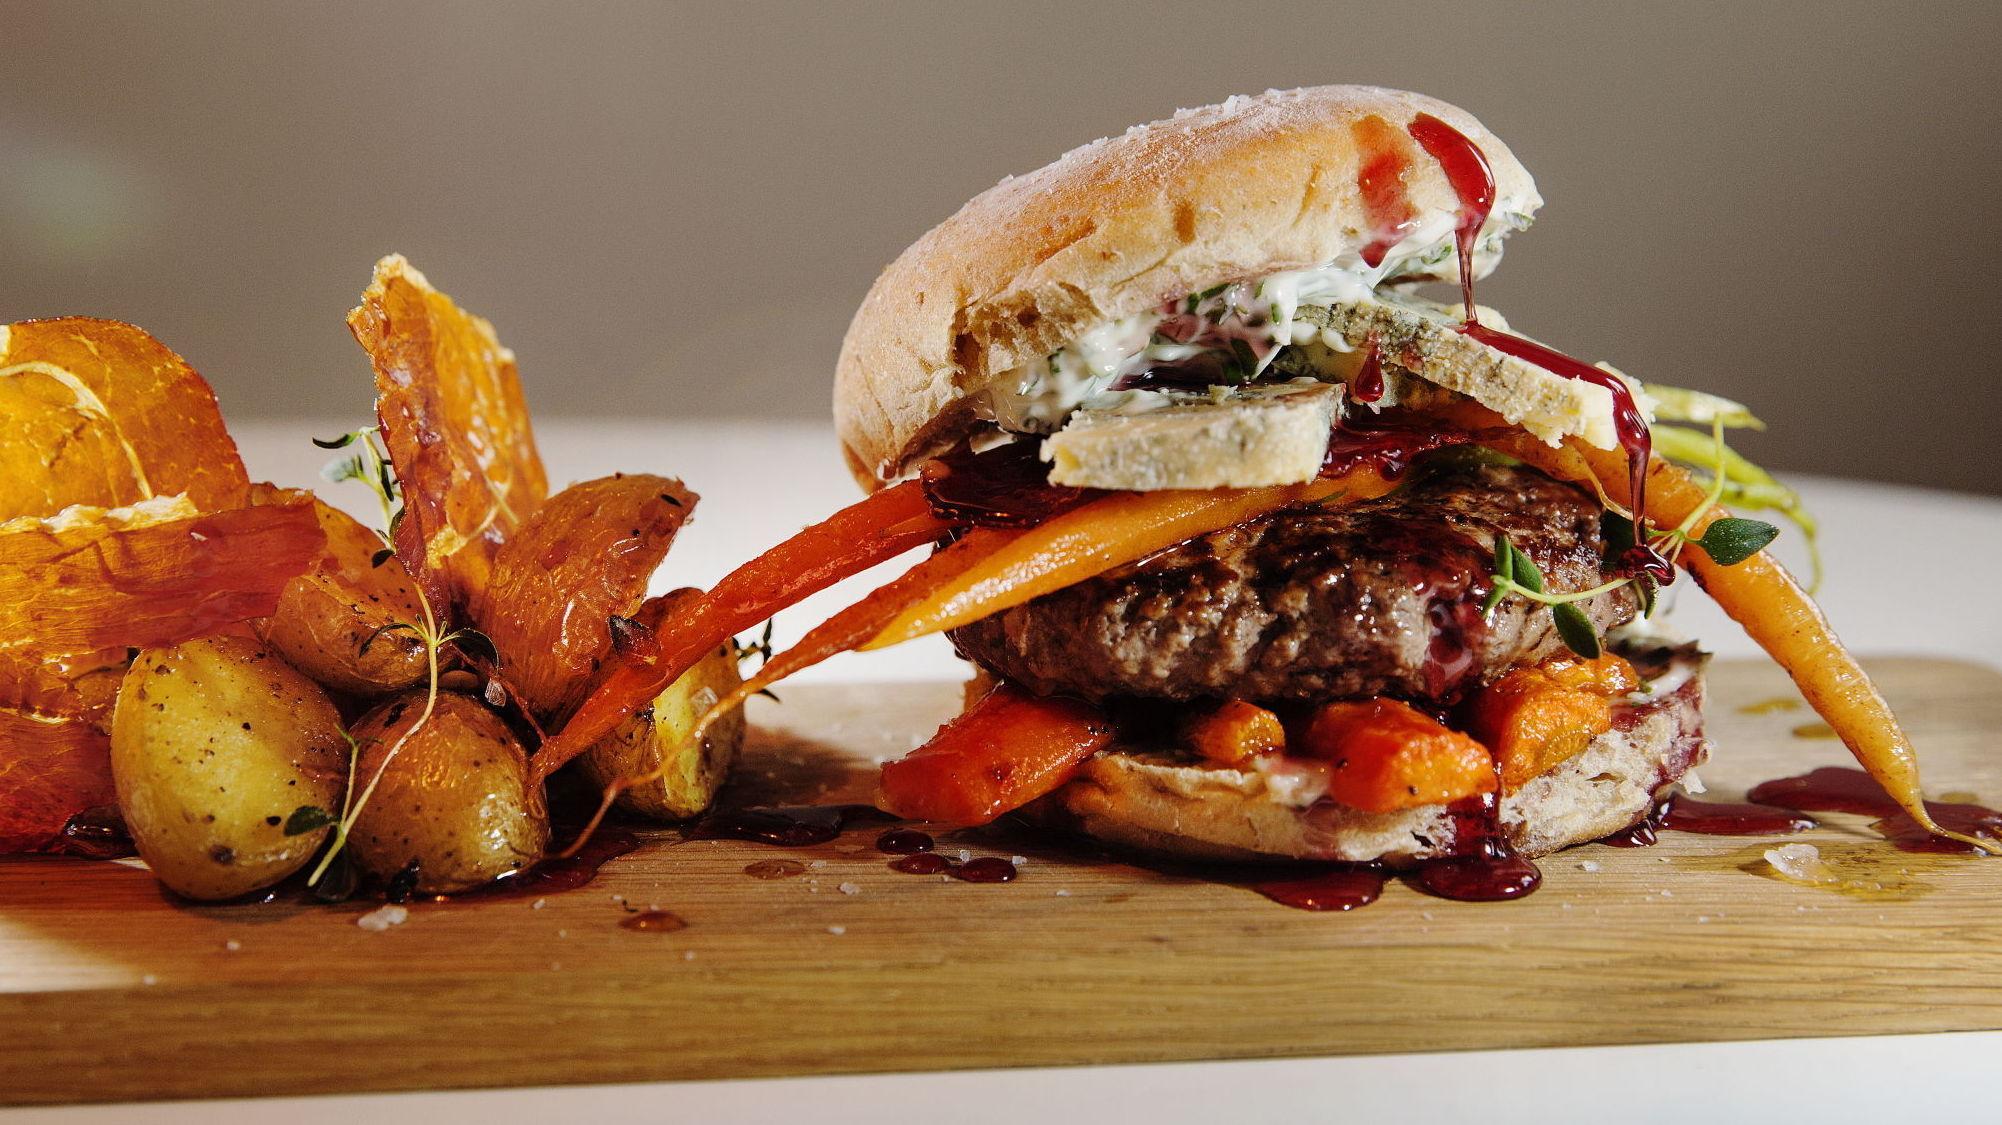 TRASH-GOURMET: Junk food som hamburger serveres ikke lenger bare som hurtigmat, men også fin restaurantmat. Her har kokk Jan Ivar Nykvist laget sin egen luksusburger. Foto: Magnar Kirknes/VG